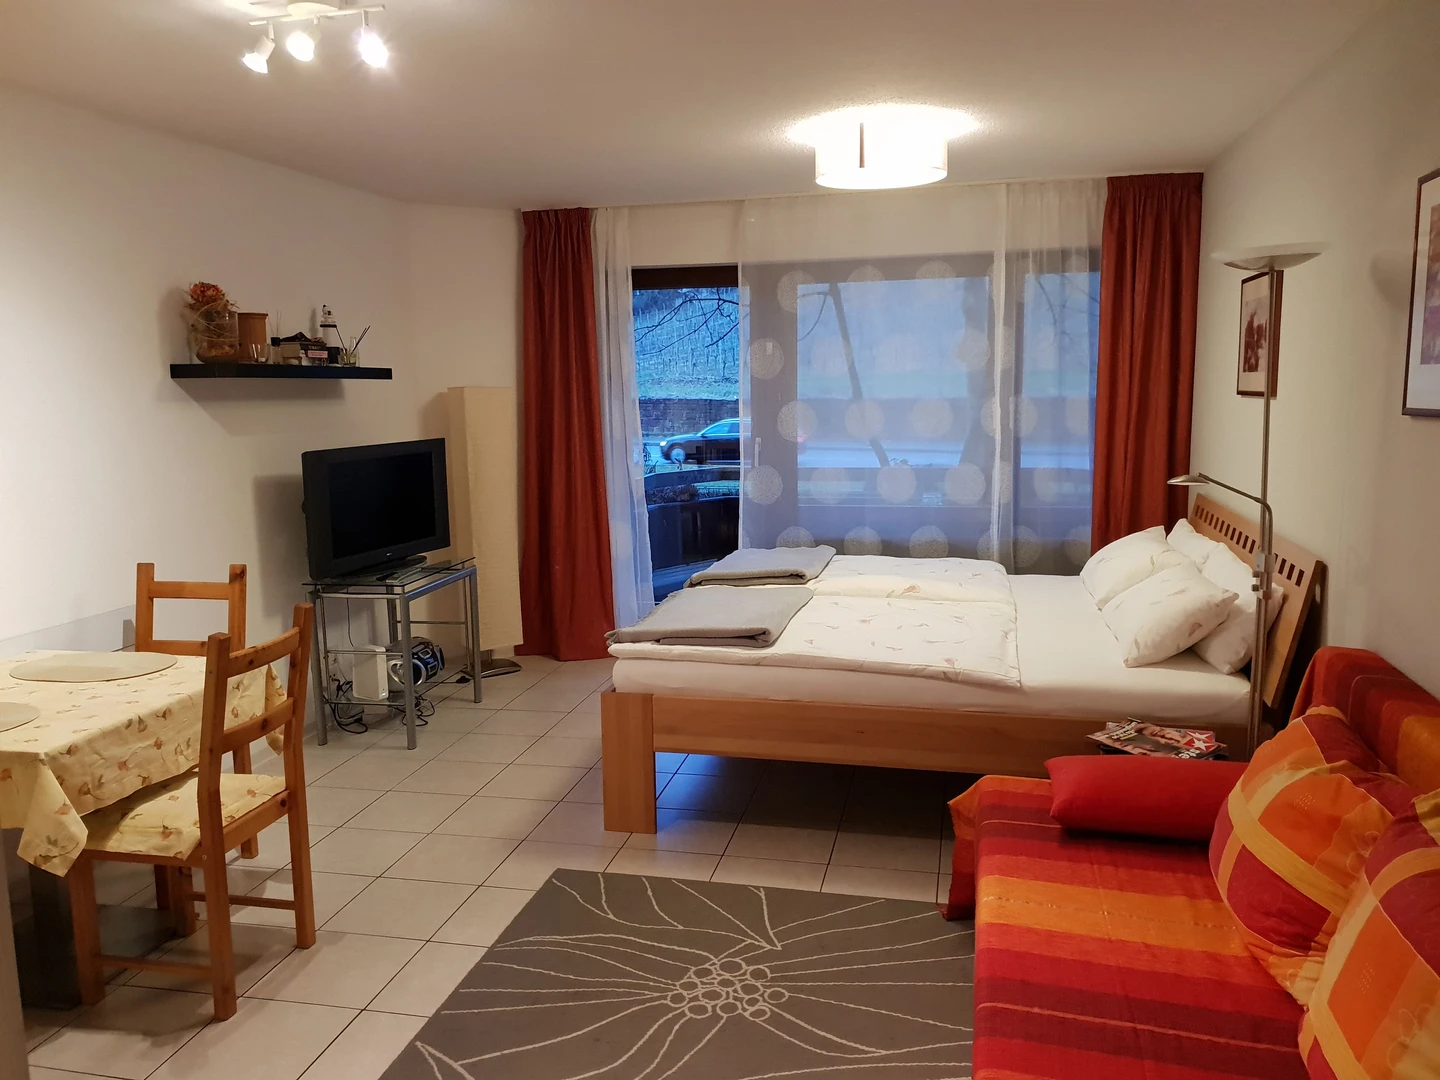 Room for rent in a shared flat in Freiburg Im Breisgau